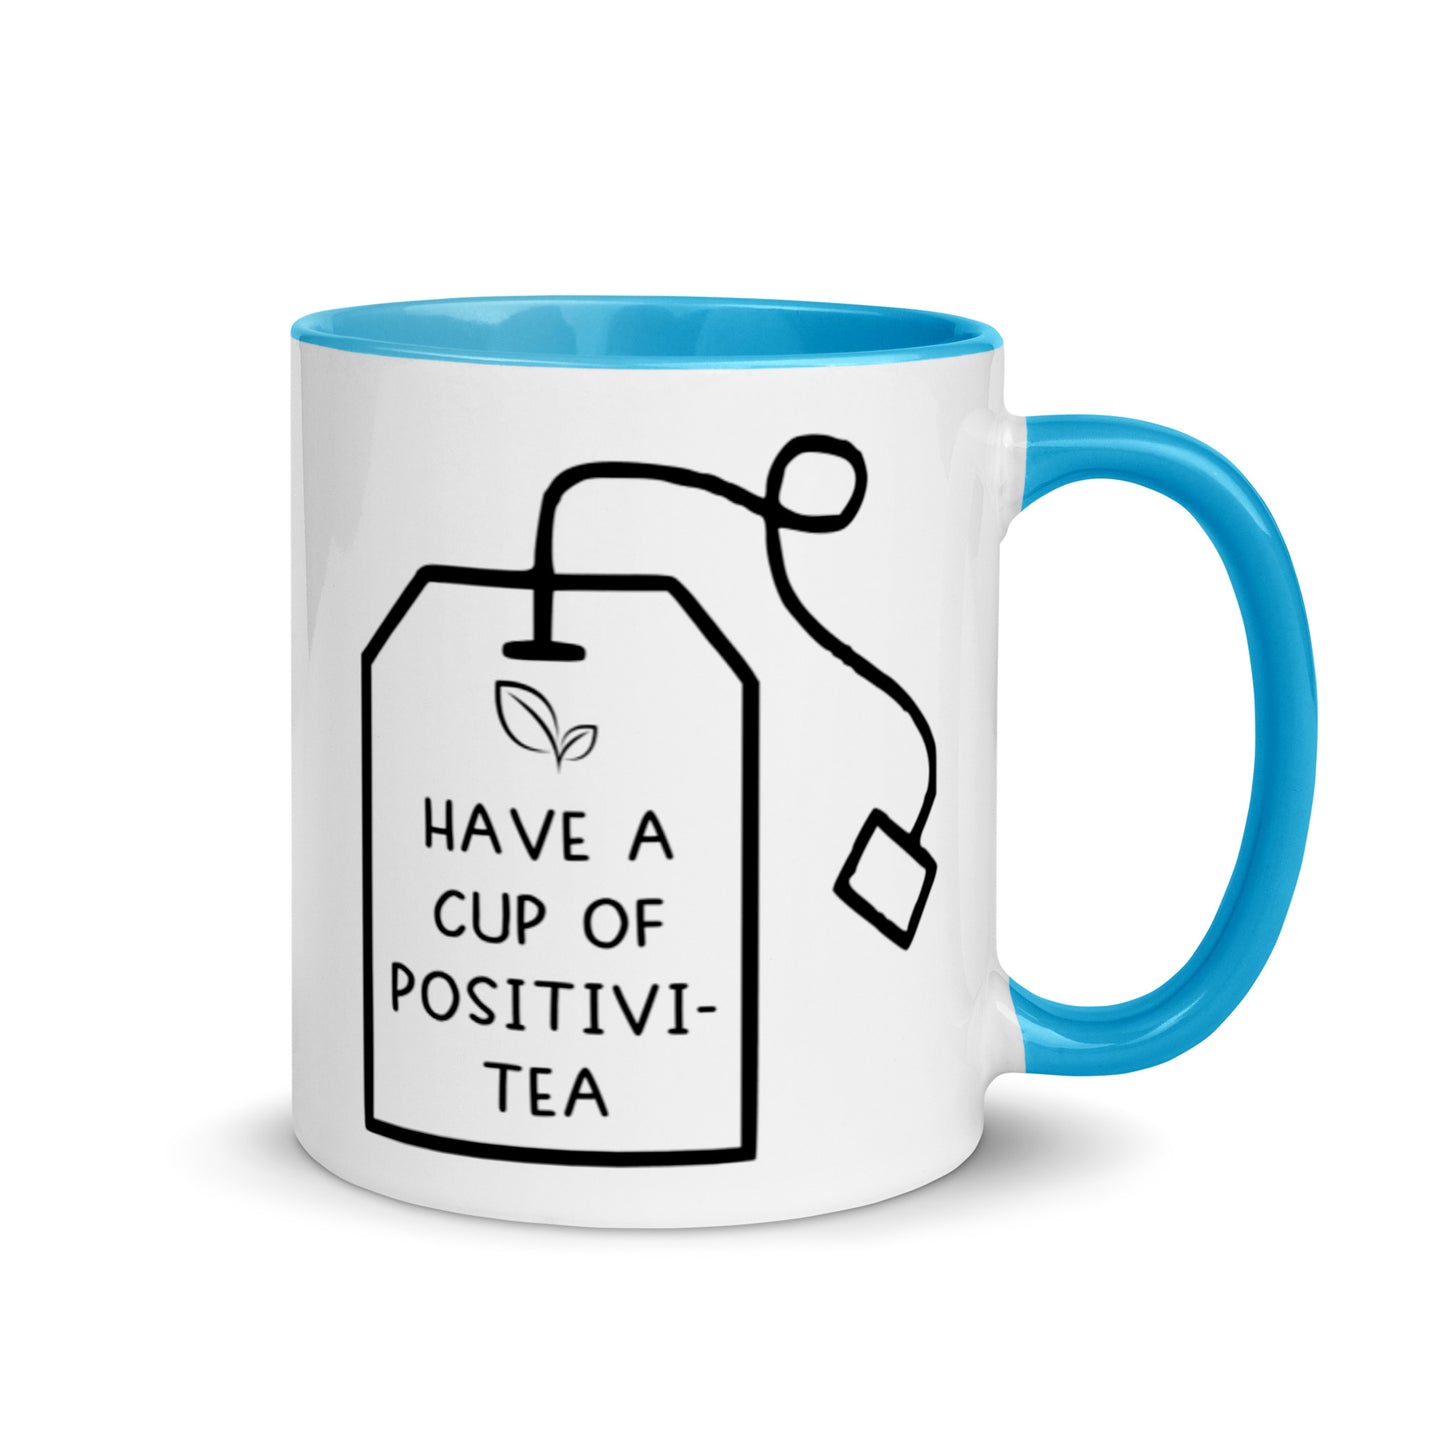 Have a Cup of Positivi-Tea Mug, teal interior and handle